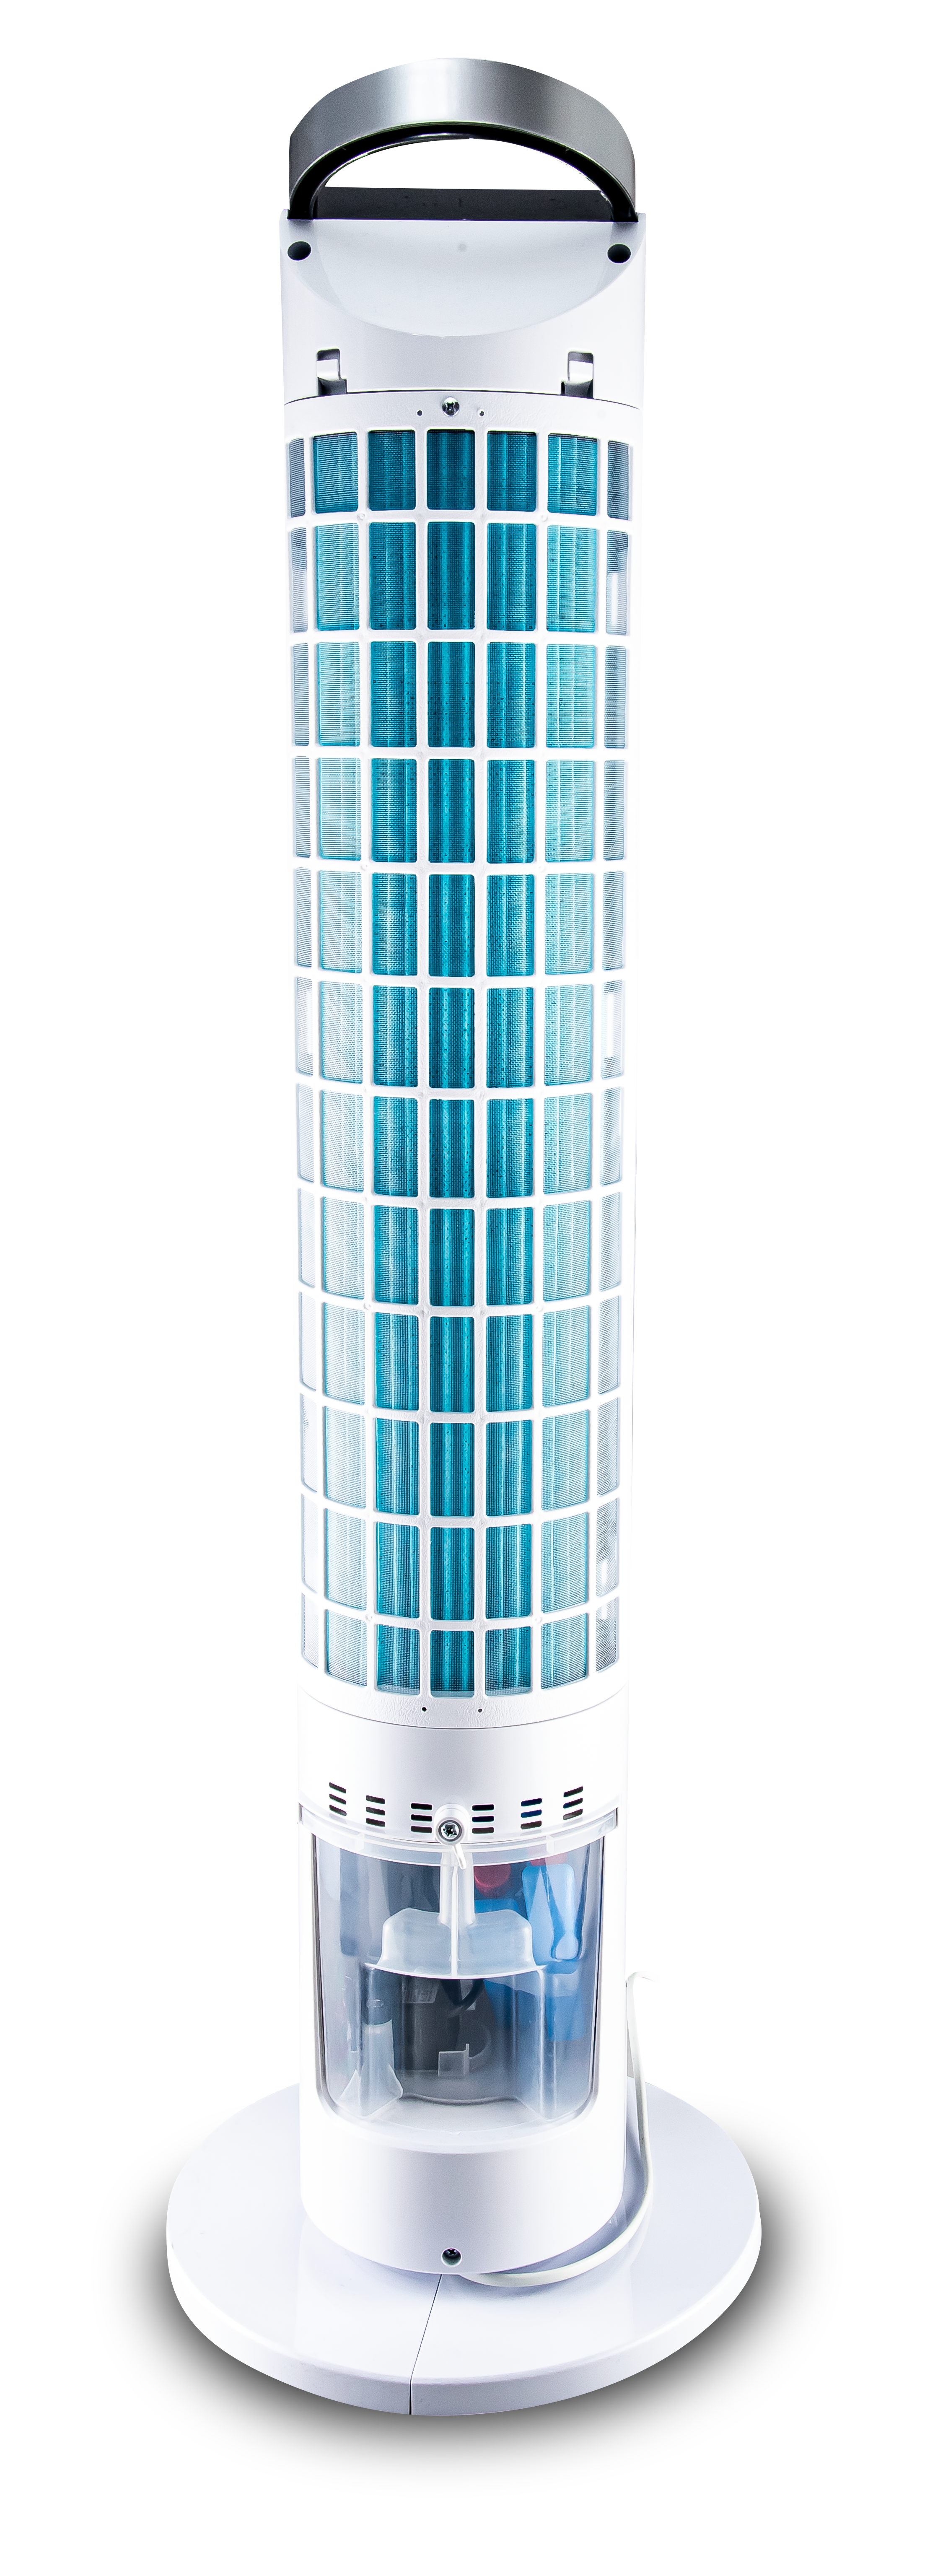 Watt) 6020 KOENIC Luftkühler Turmventilator, Weiß KTFC 2IN1 (60